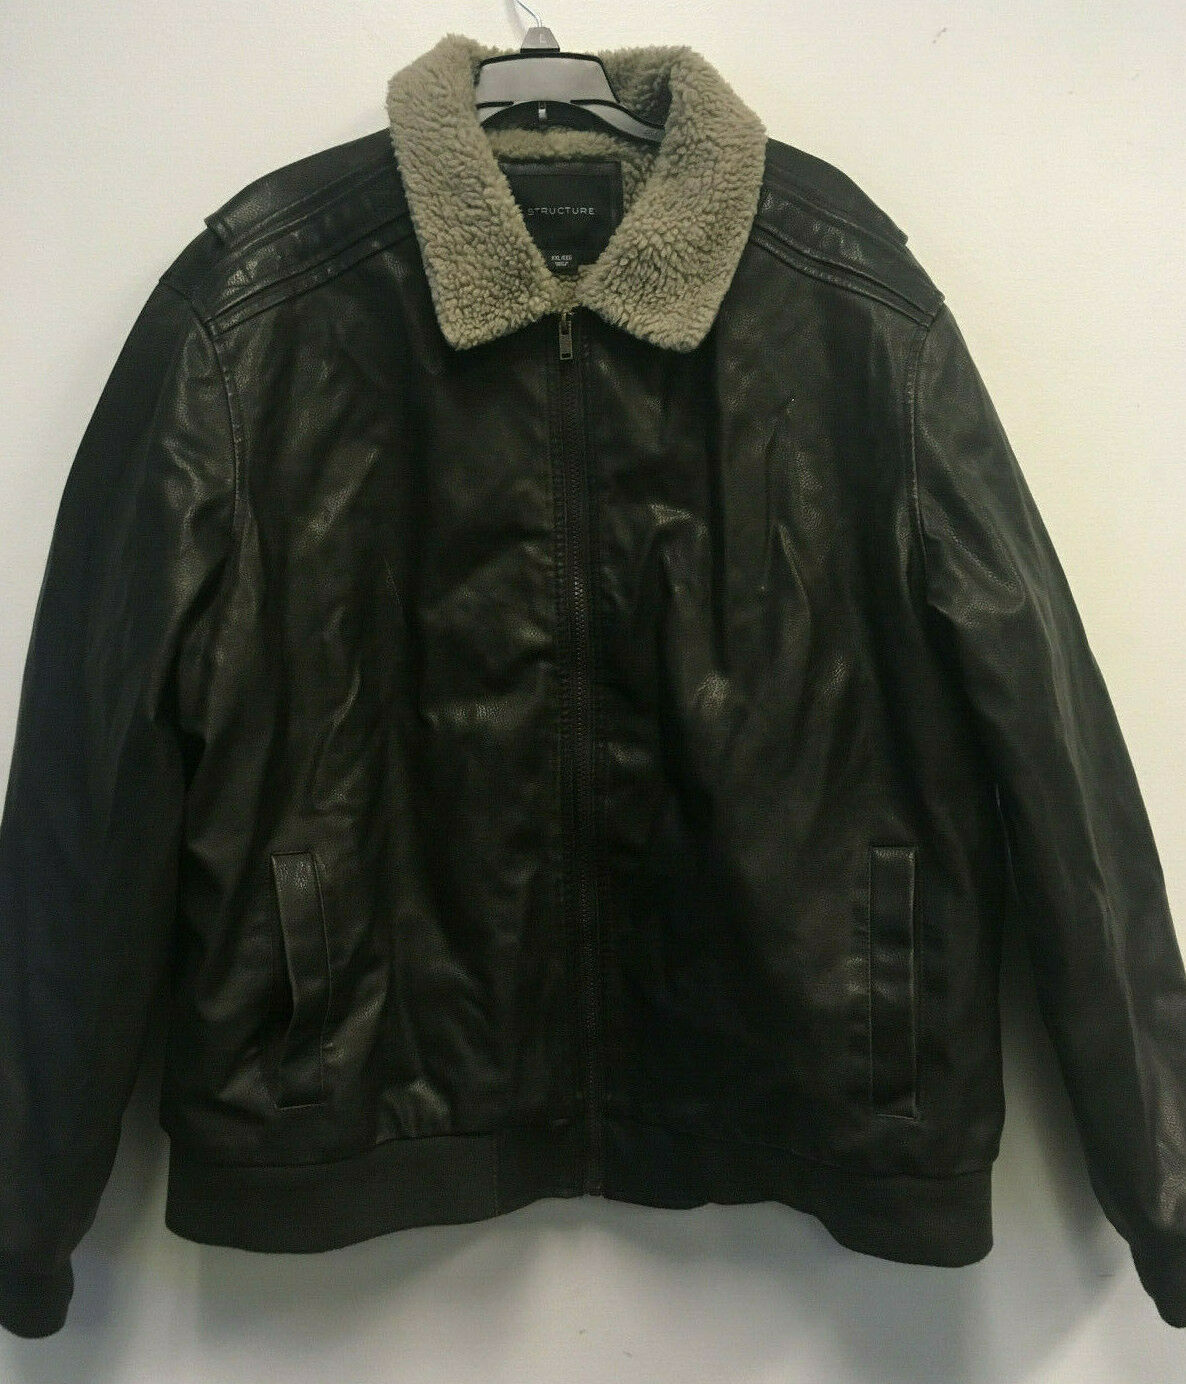 Mens Structure Leather Jacket Sz XXL - Outerwear